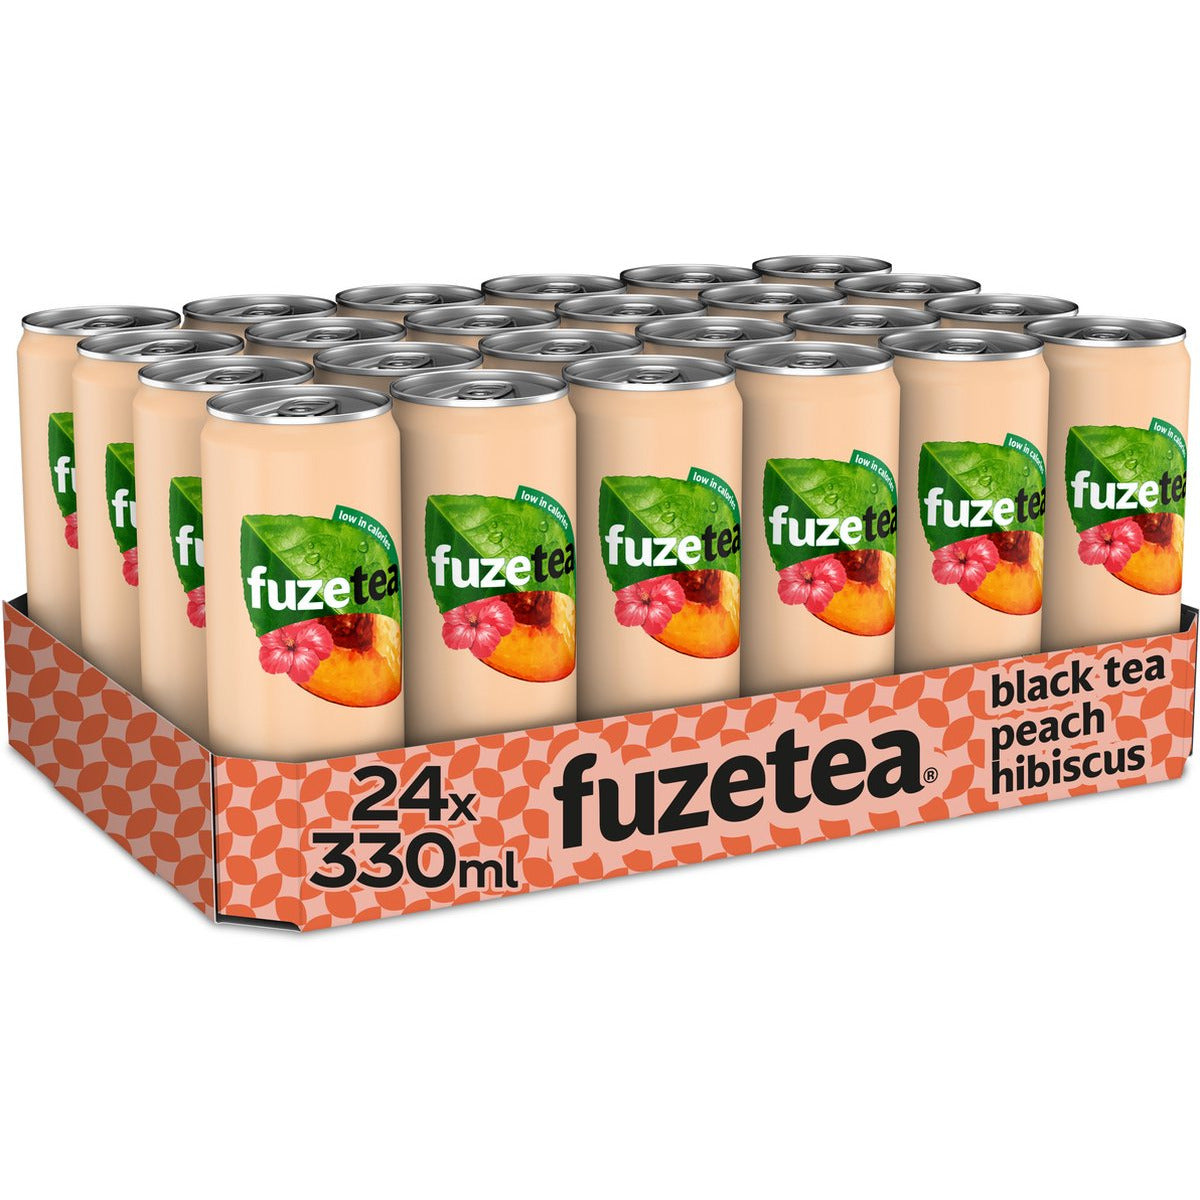 Fuze Tea Black Tea Peach Hibiscus NL Excl Statiegeld 24x330ml